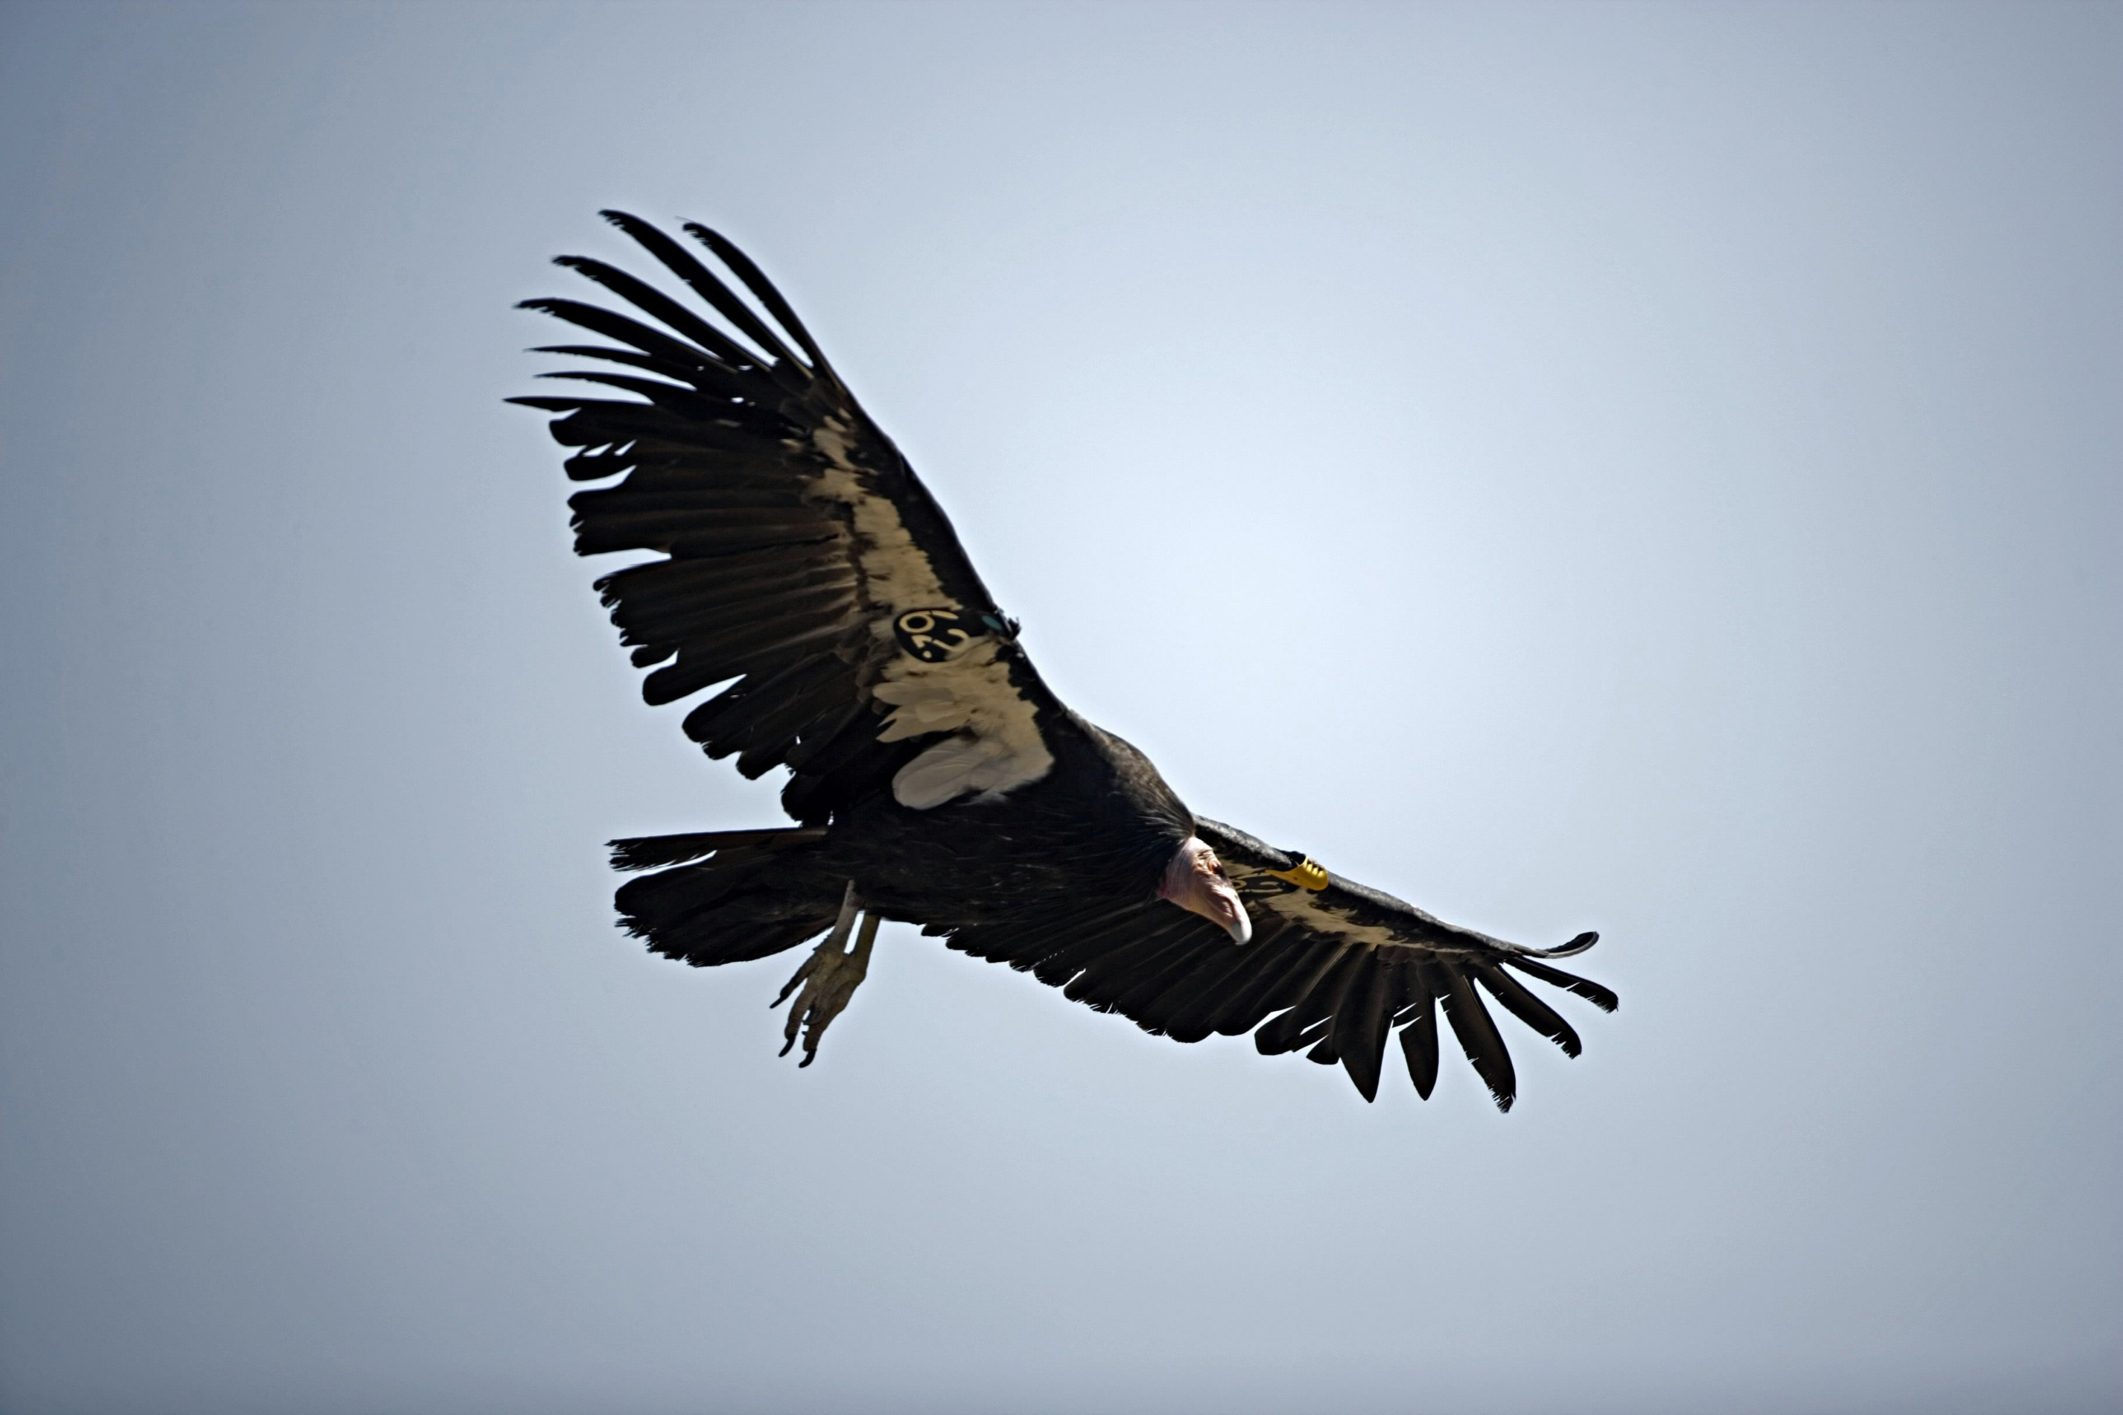 PHOTO: California Condor (Gymnogyps californianus) is pictured in flight in this undated stock photo.